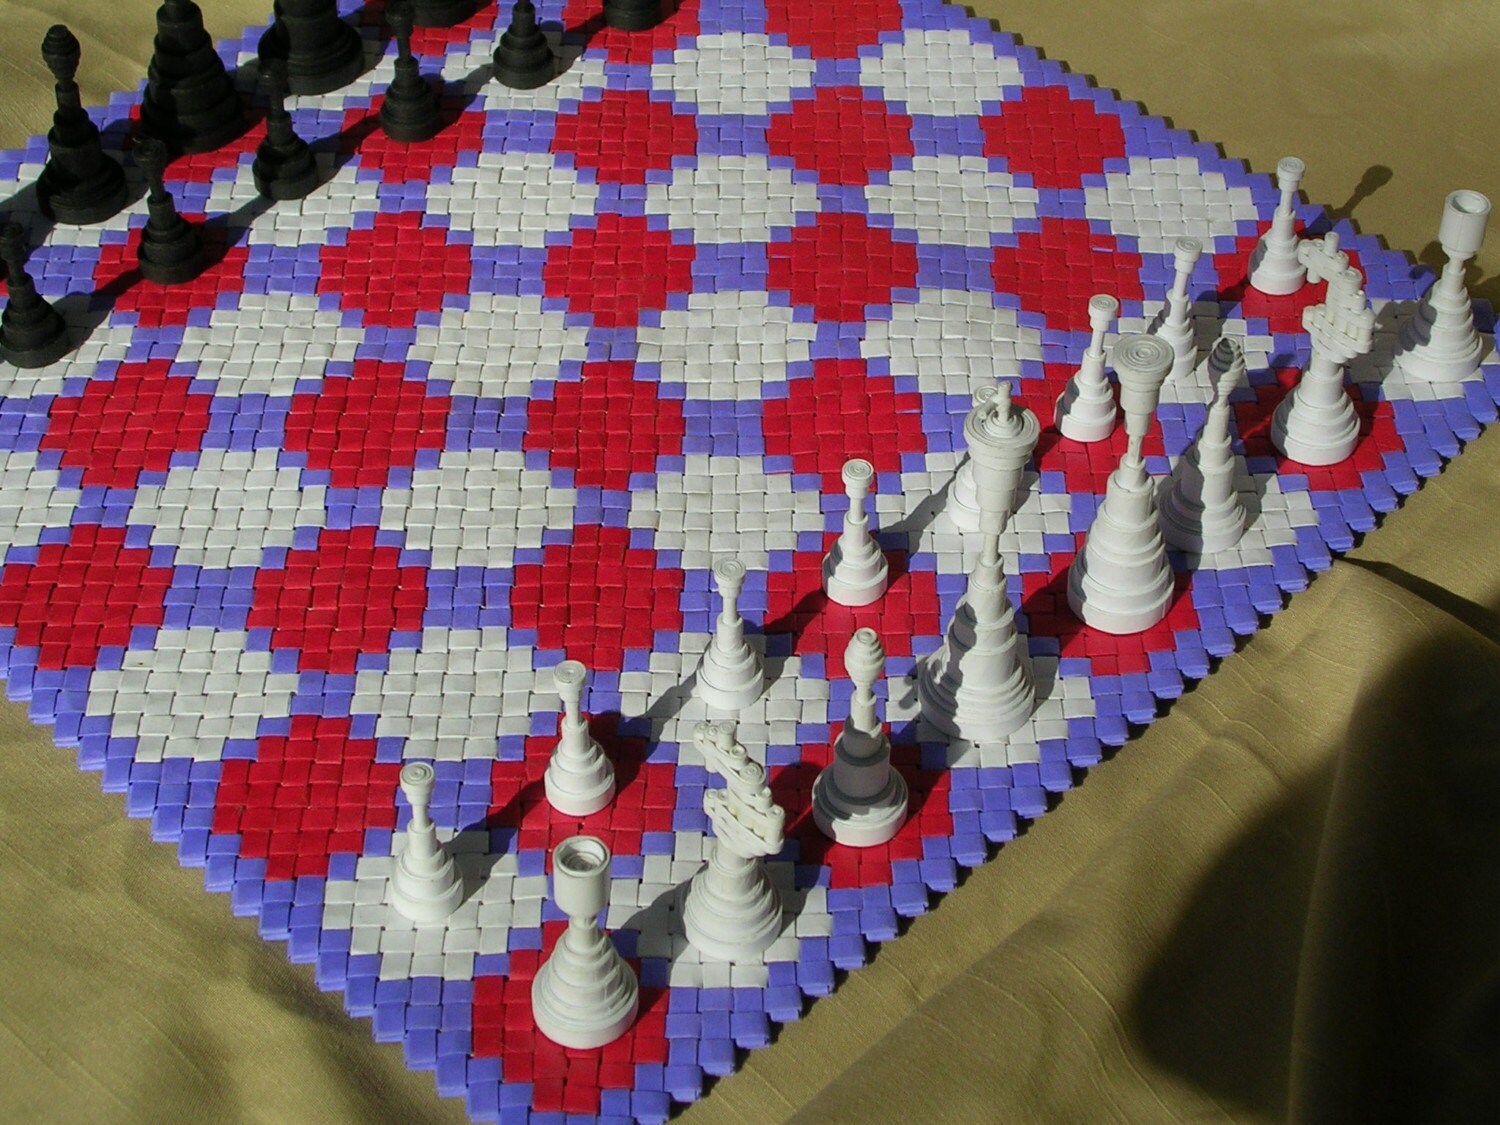 Paper Chess Set